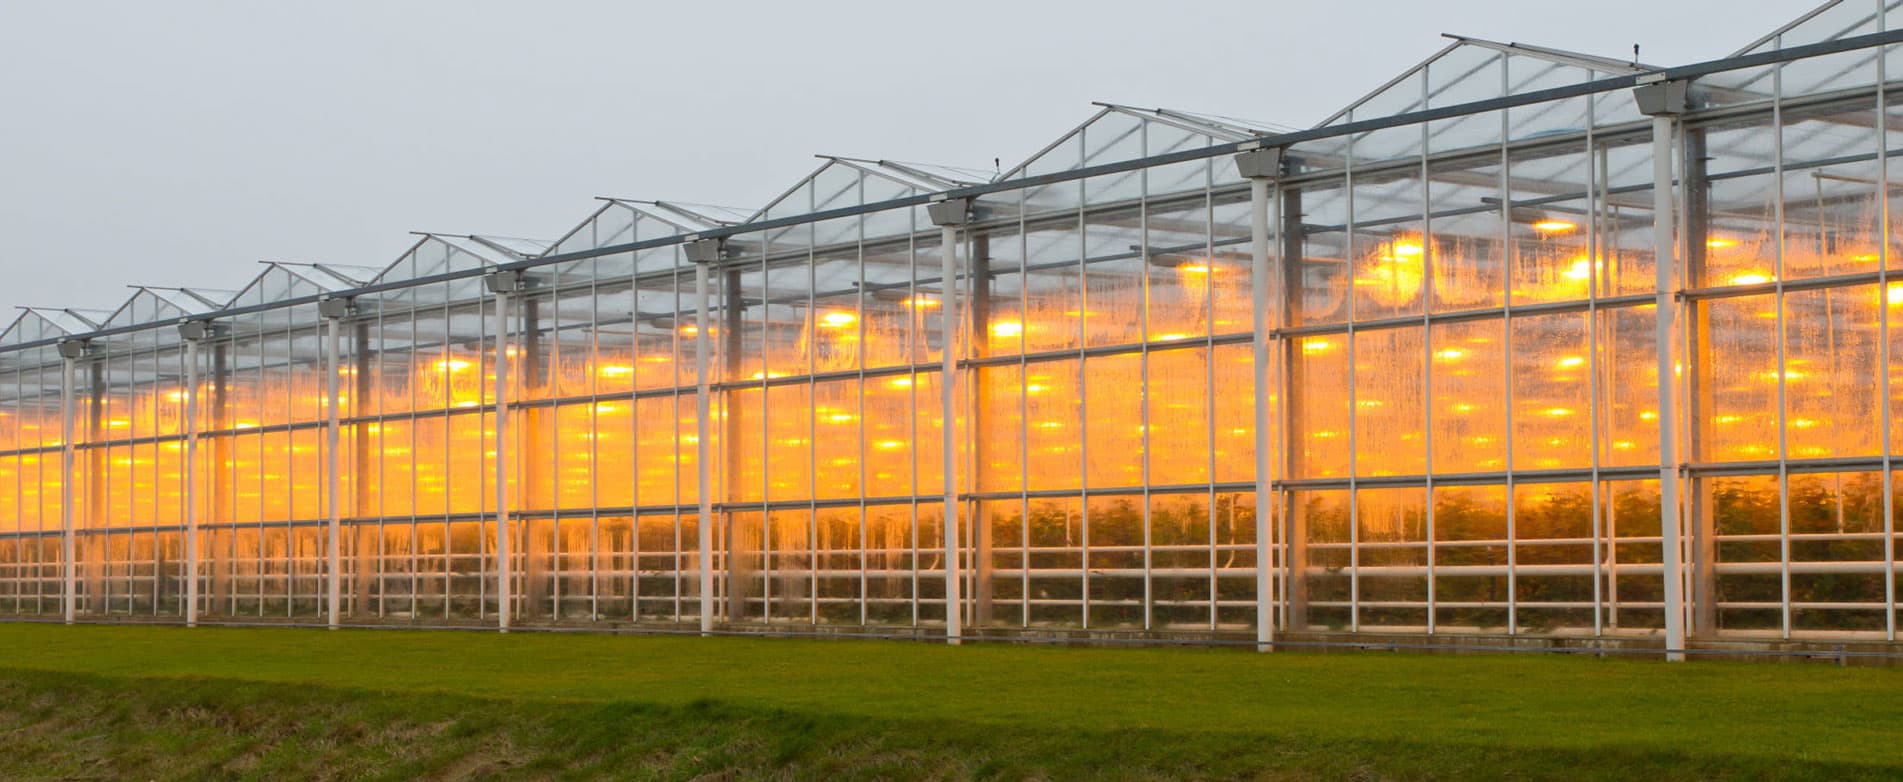 Led Grow Lights for Vertical Farming